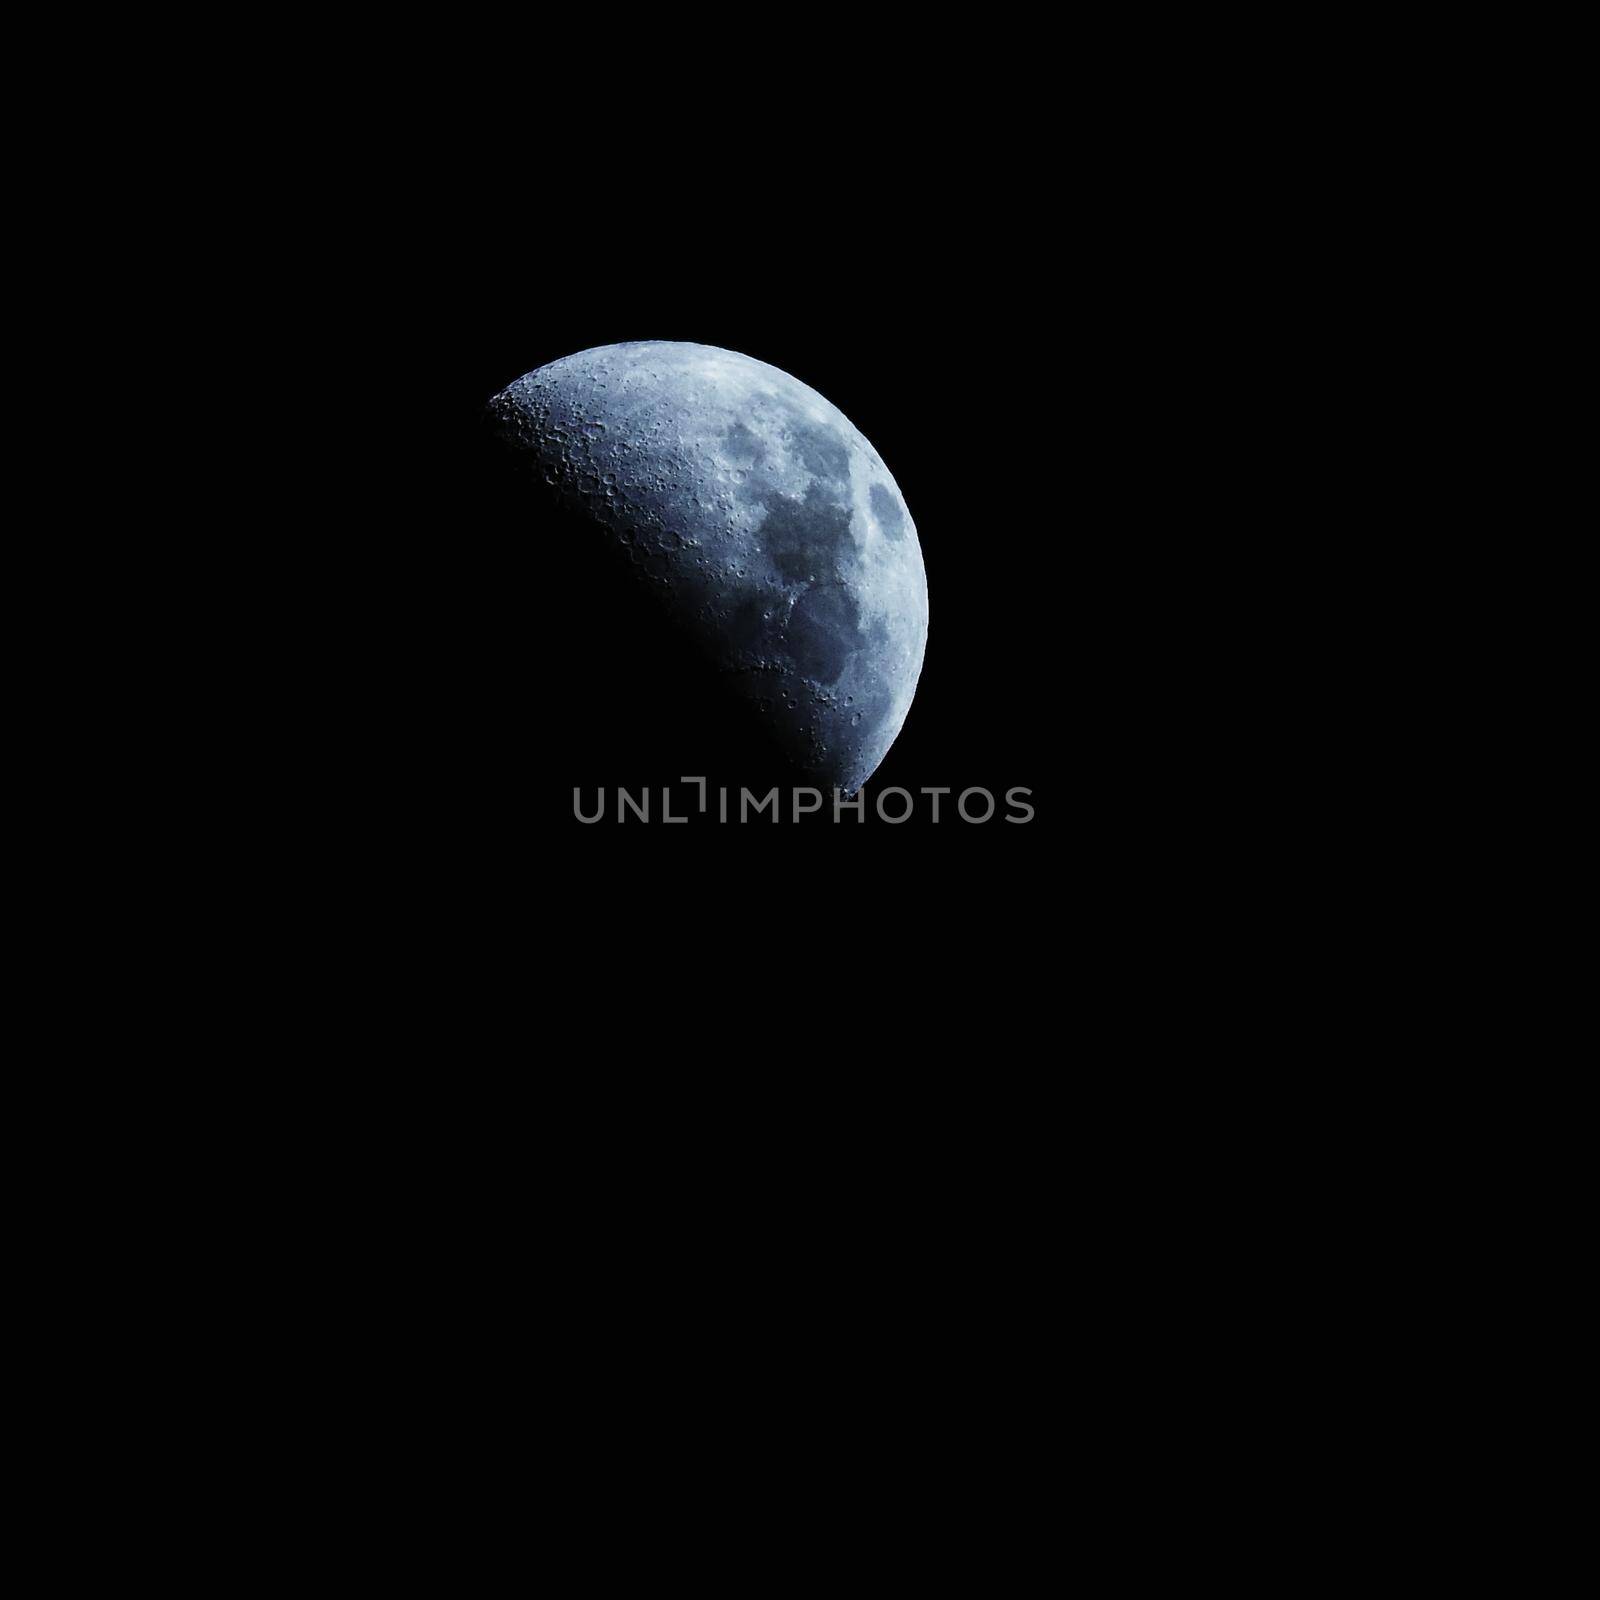 Moon over dark black sky at night by Montypeter